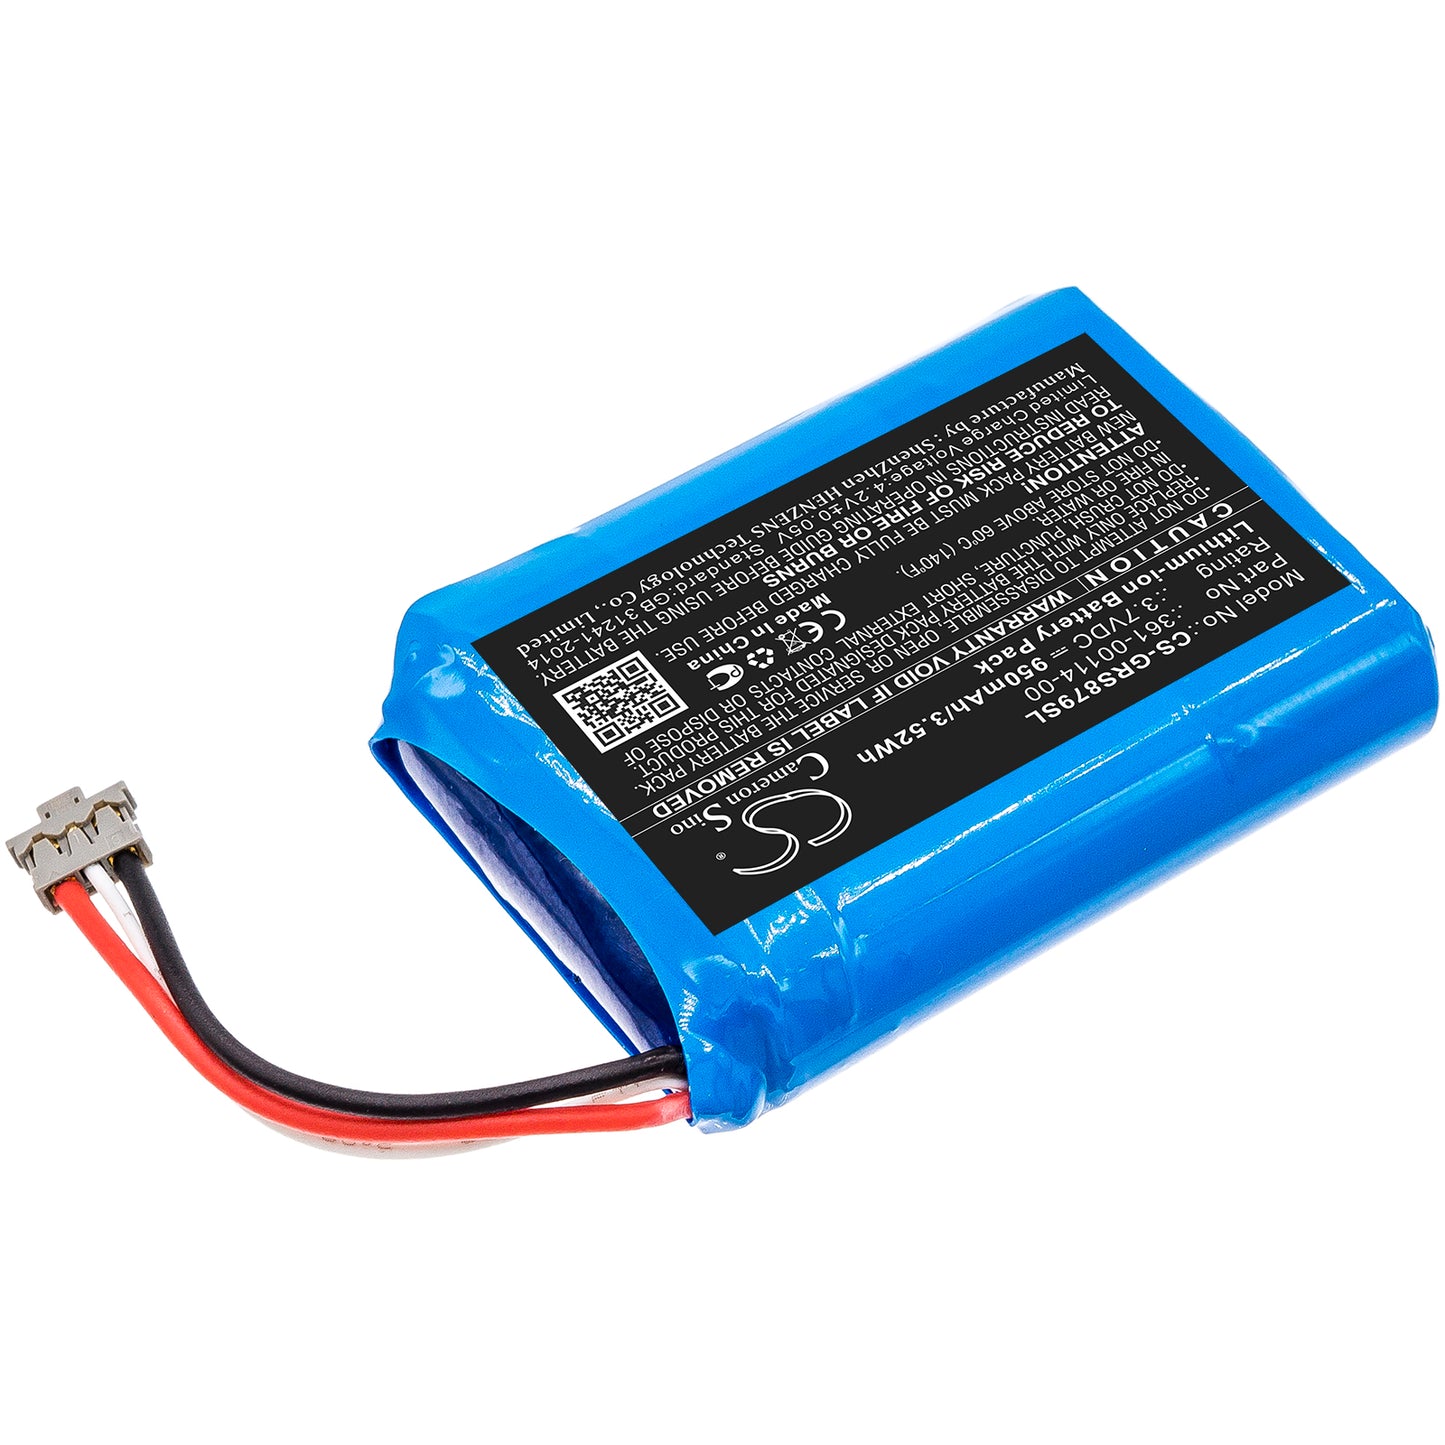 950mAh 361-00114-00 Battery for Garmin 010-01879-00 inReach Mini-SMAVtronics